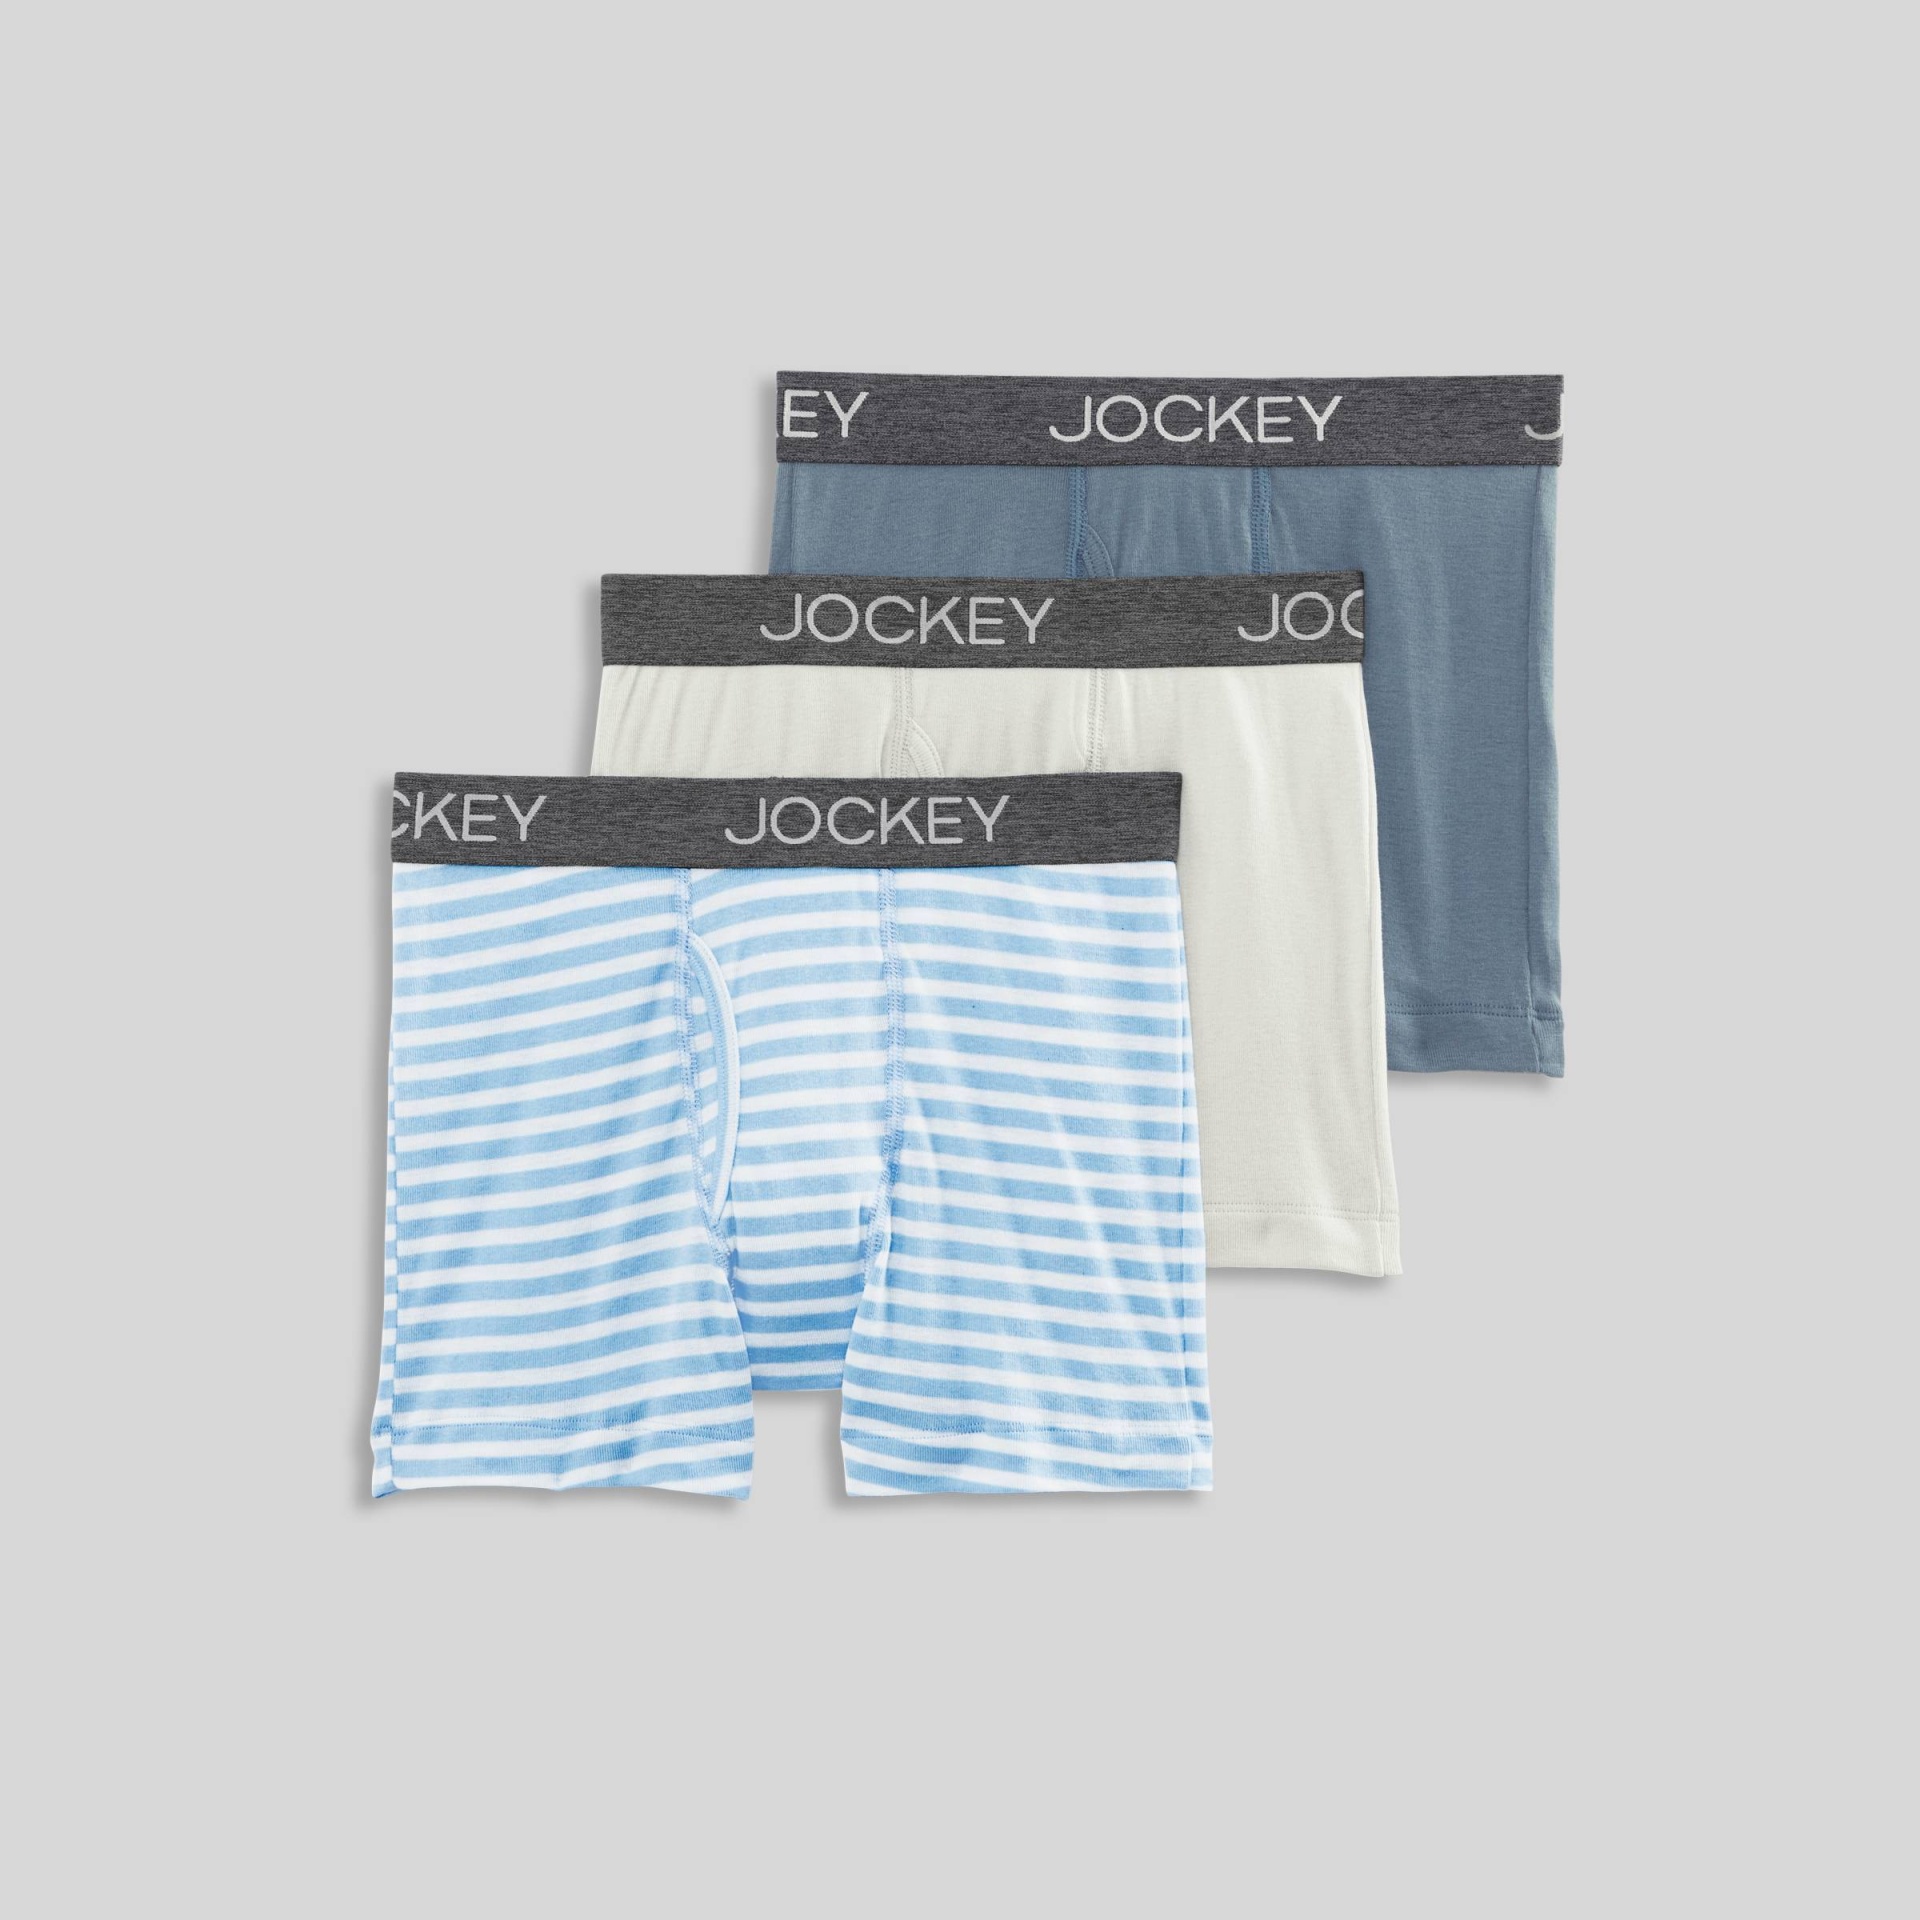 Jockey Generation Boys' 3pk Cotton Boxer Briefs'- Gray/Blue S 1 ct